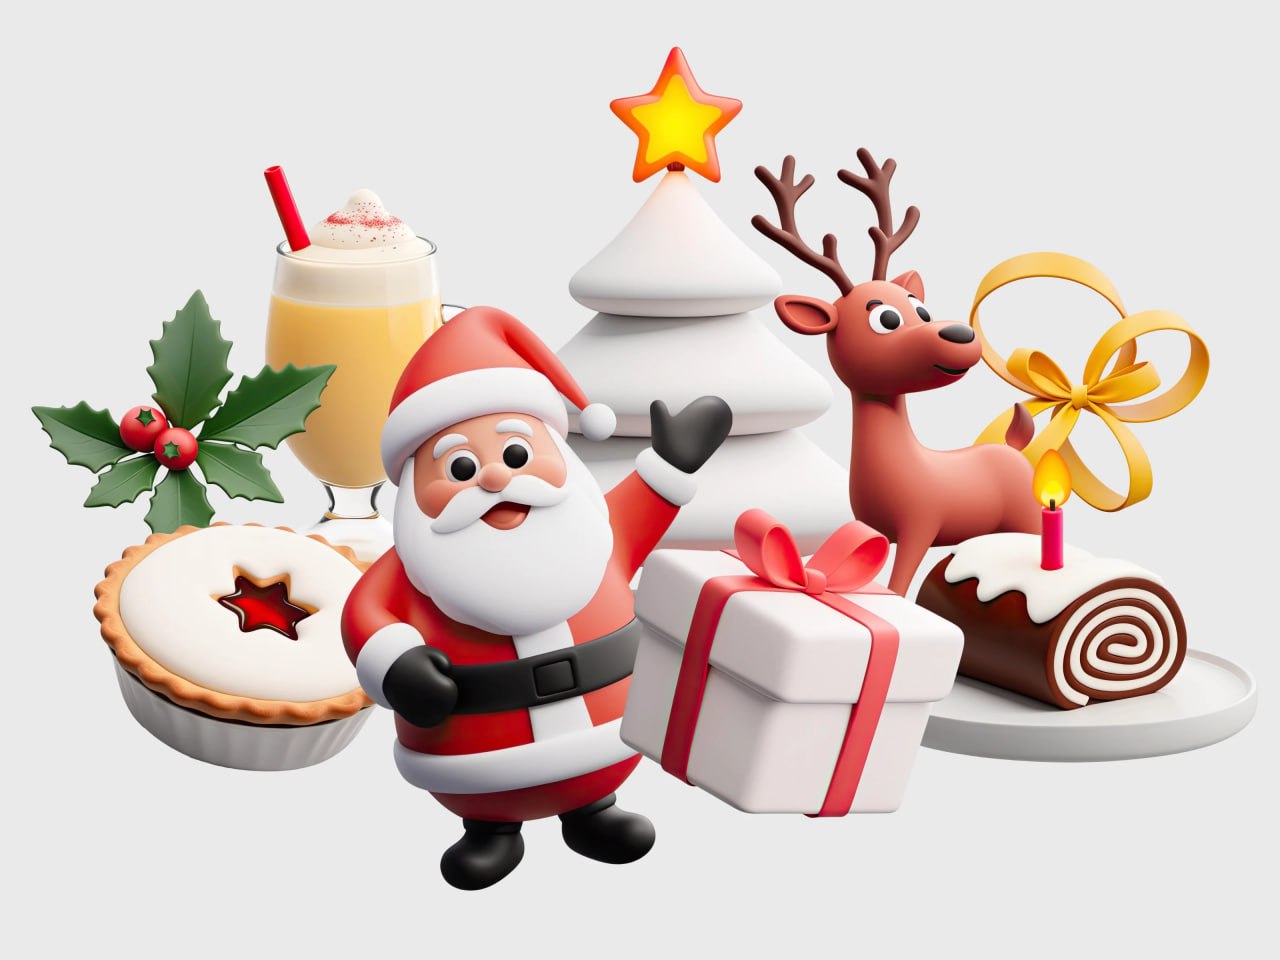 Free Christmas Icons 3D #christmas #icons #3d #xmas